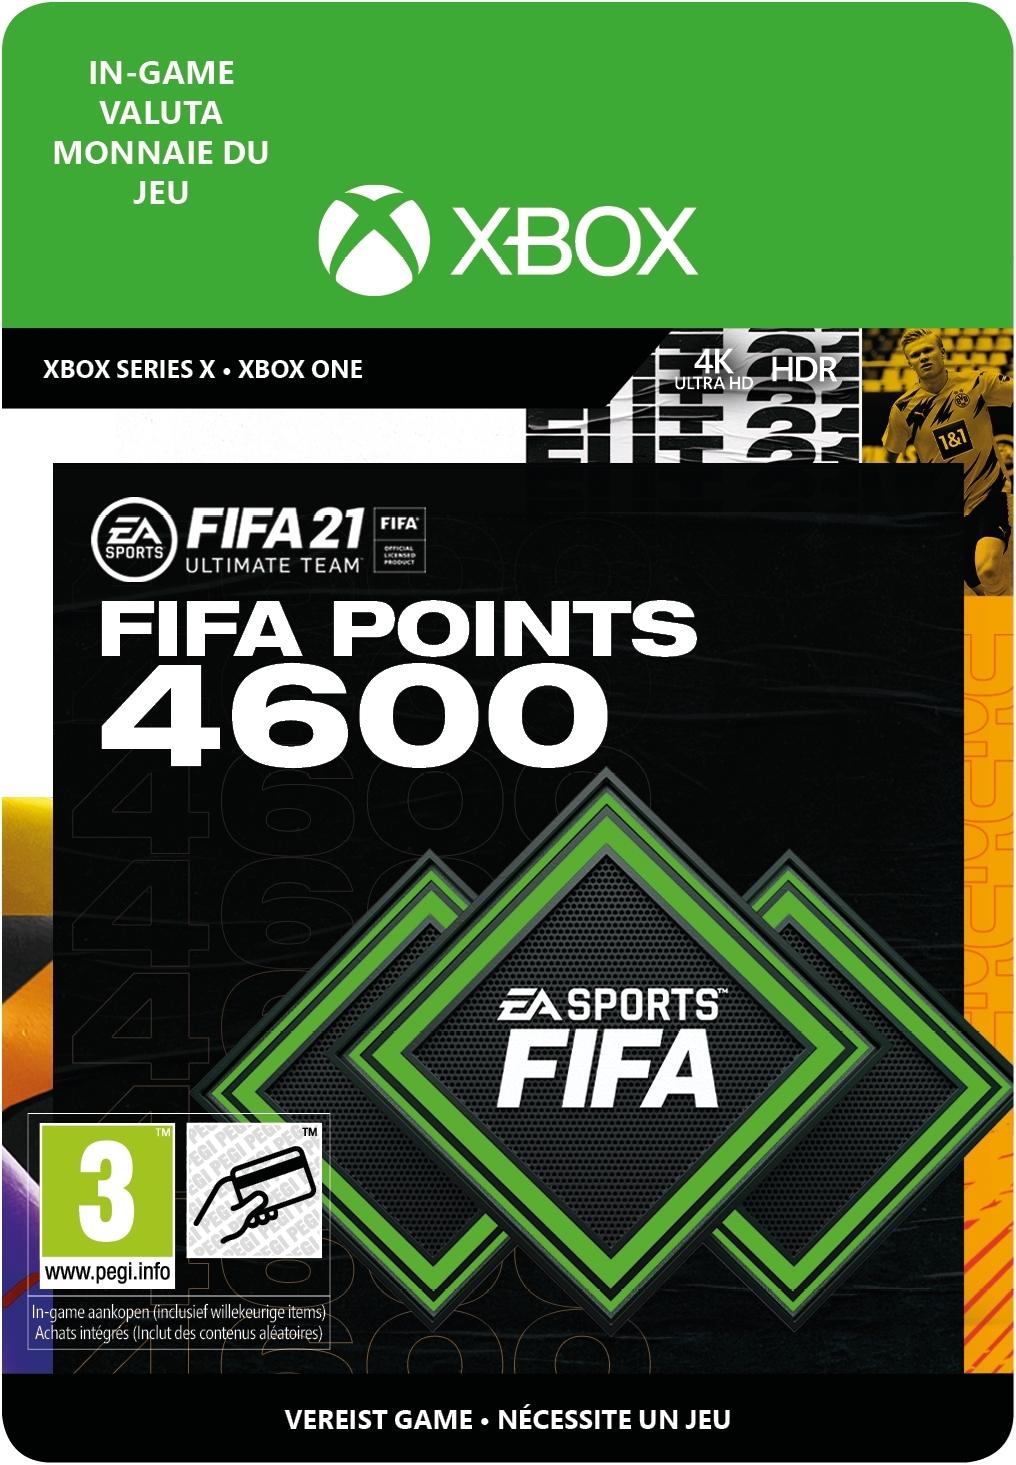 FIFA 21 Ultimate Team 4600 Points - Xbox One - Currency - Niet beschikbaar in Belgie | 7F6-00312 (9600876a-eda4-664c-b6b1-adb375559837)